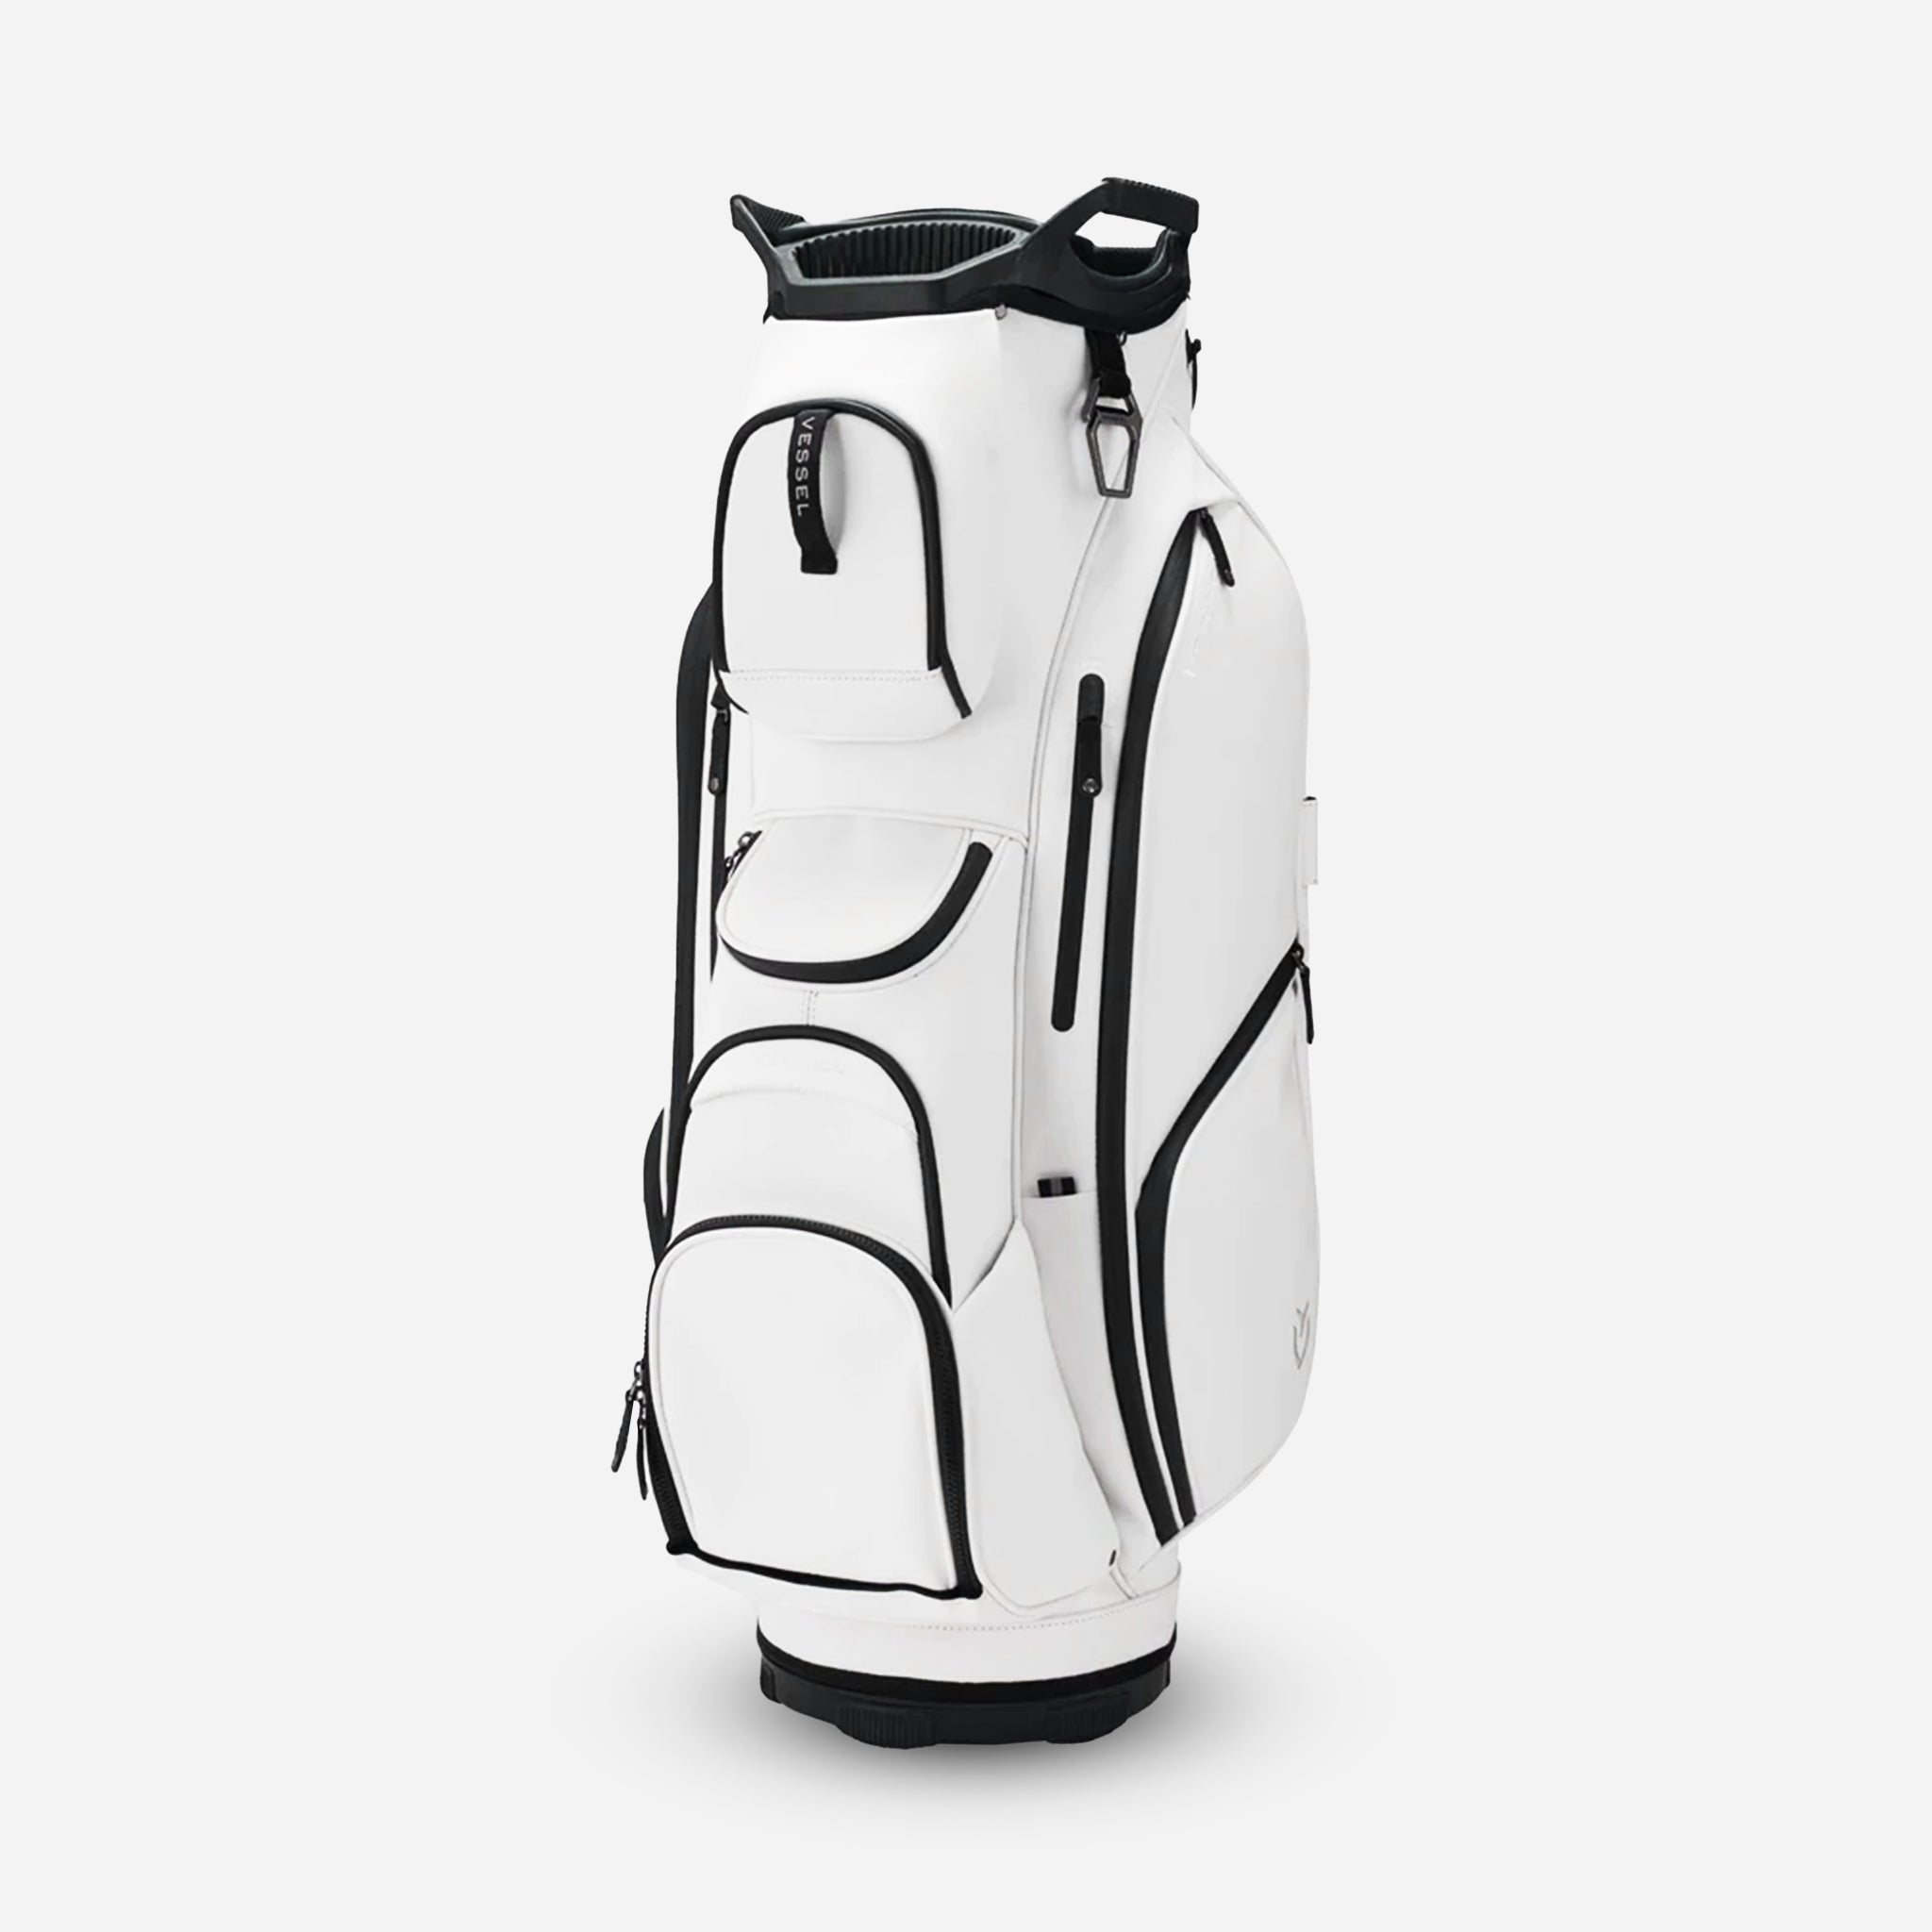 120 Vessel Custom Golf Bags ideas